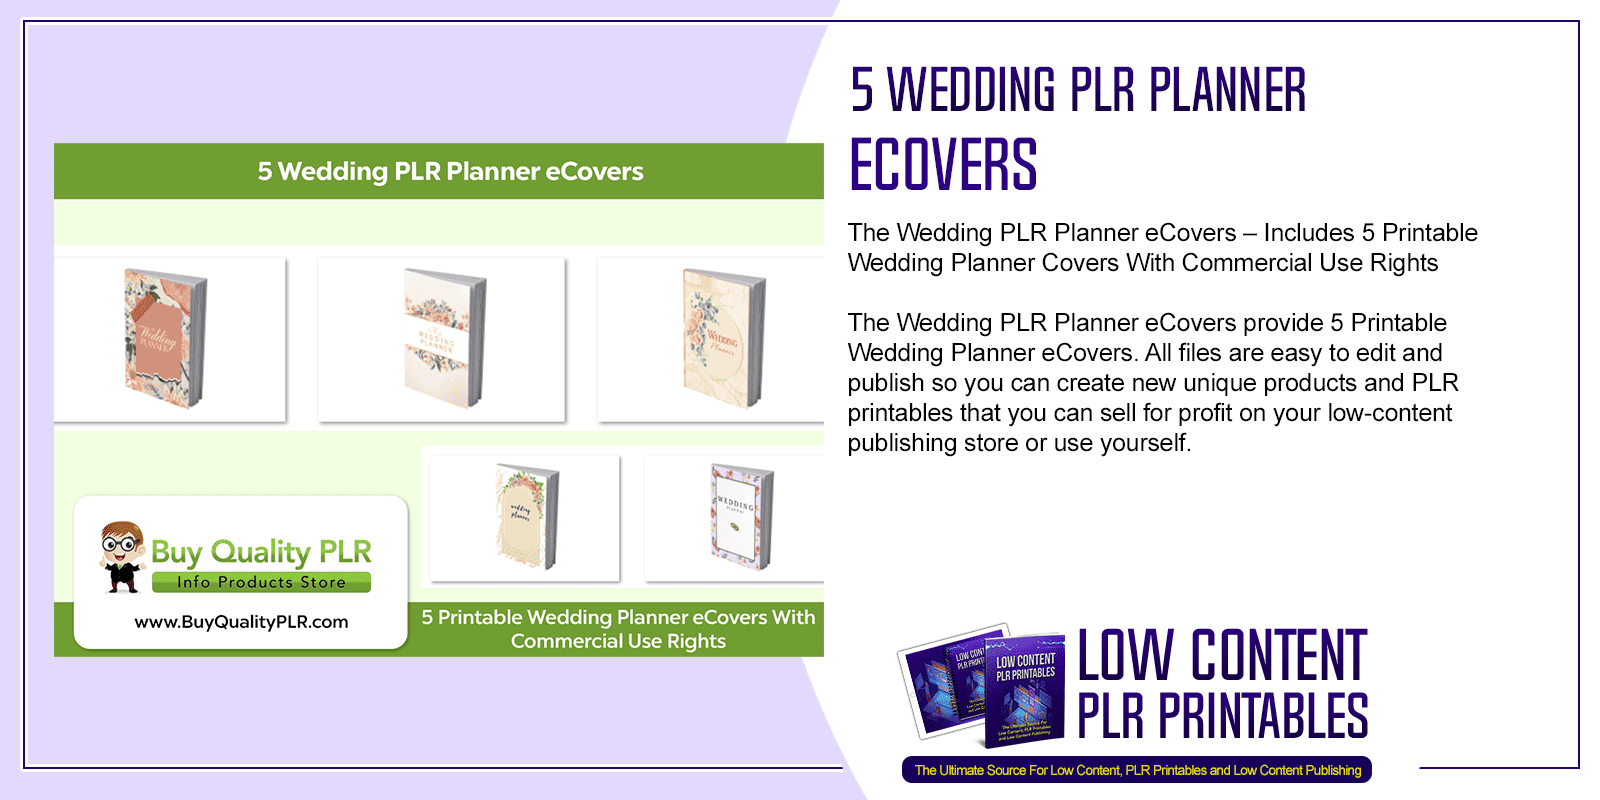 5 Wedding PLR Planner eCovers